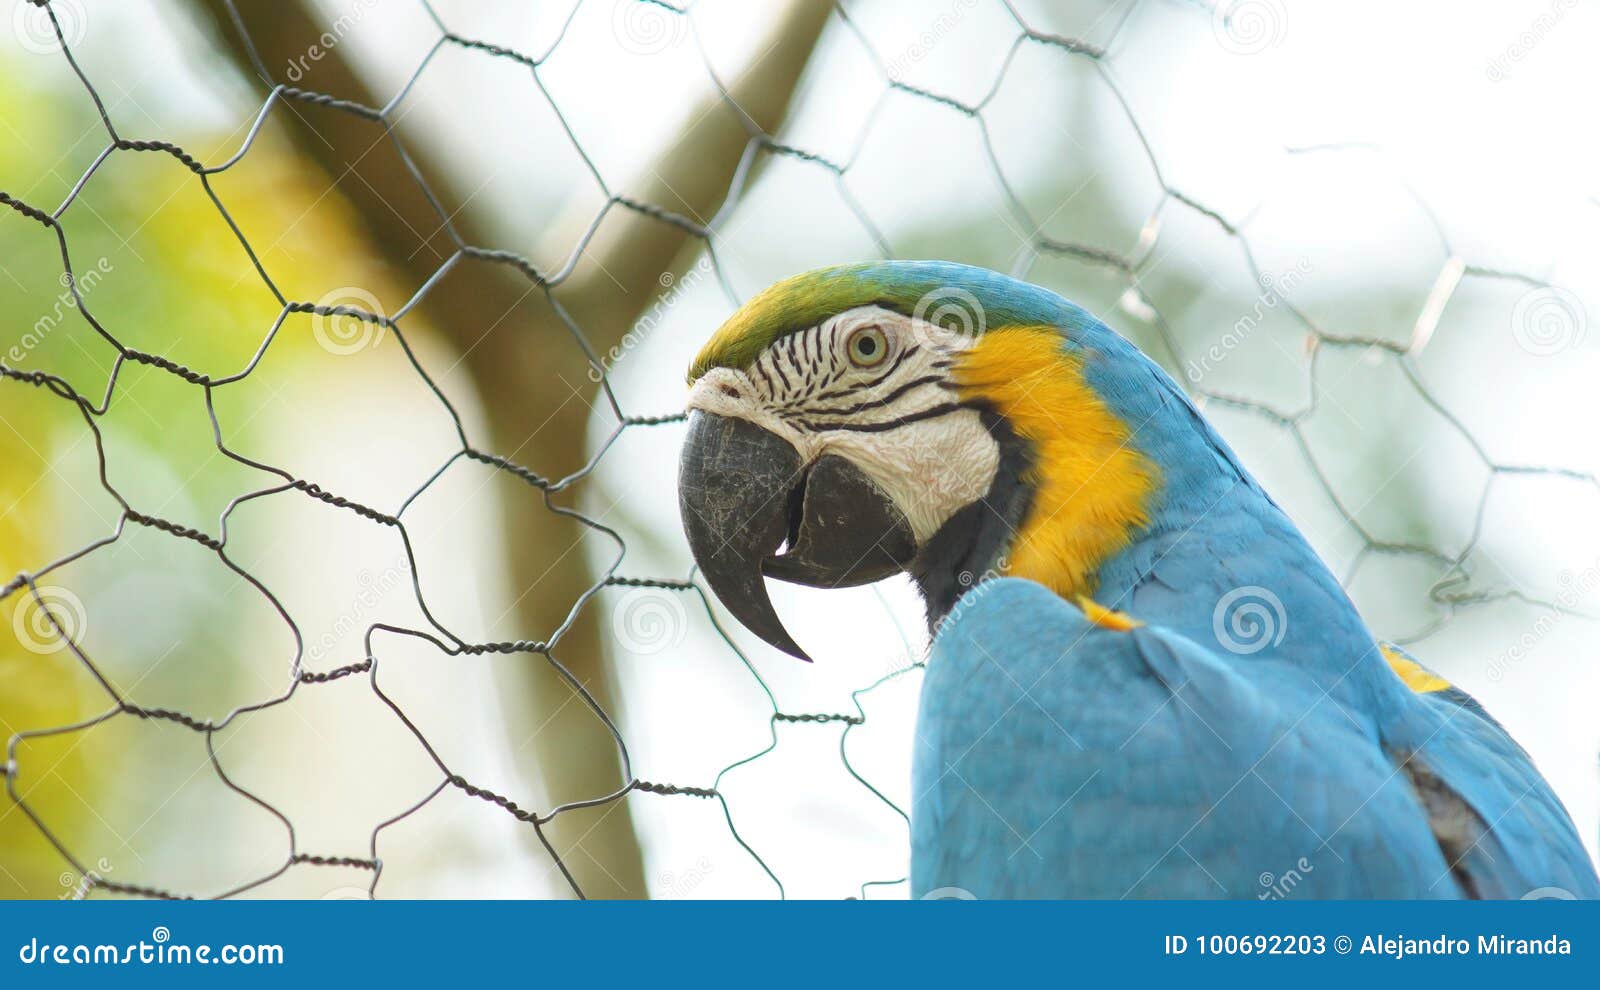 caged macaw in ecuadorian amazon. common names: guacamayo or papagayo